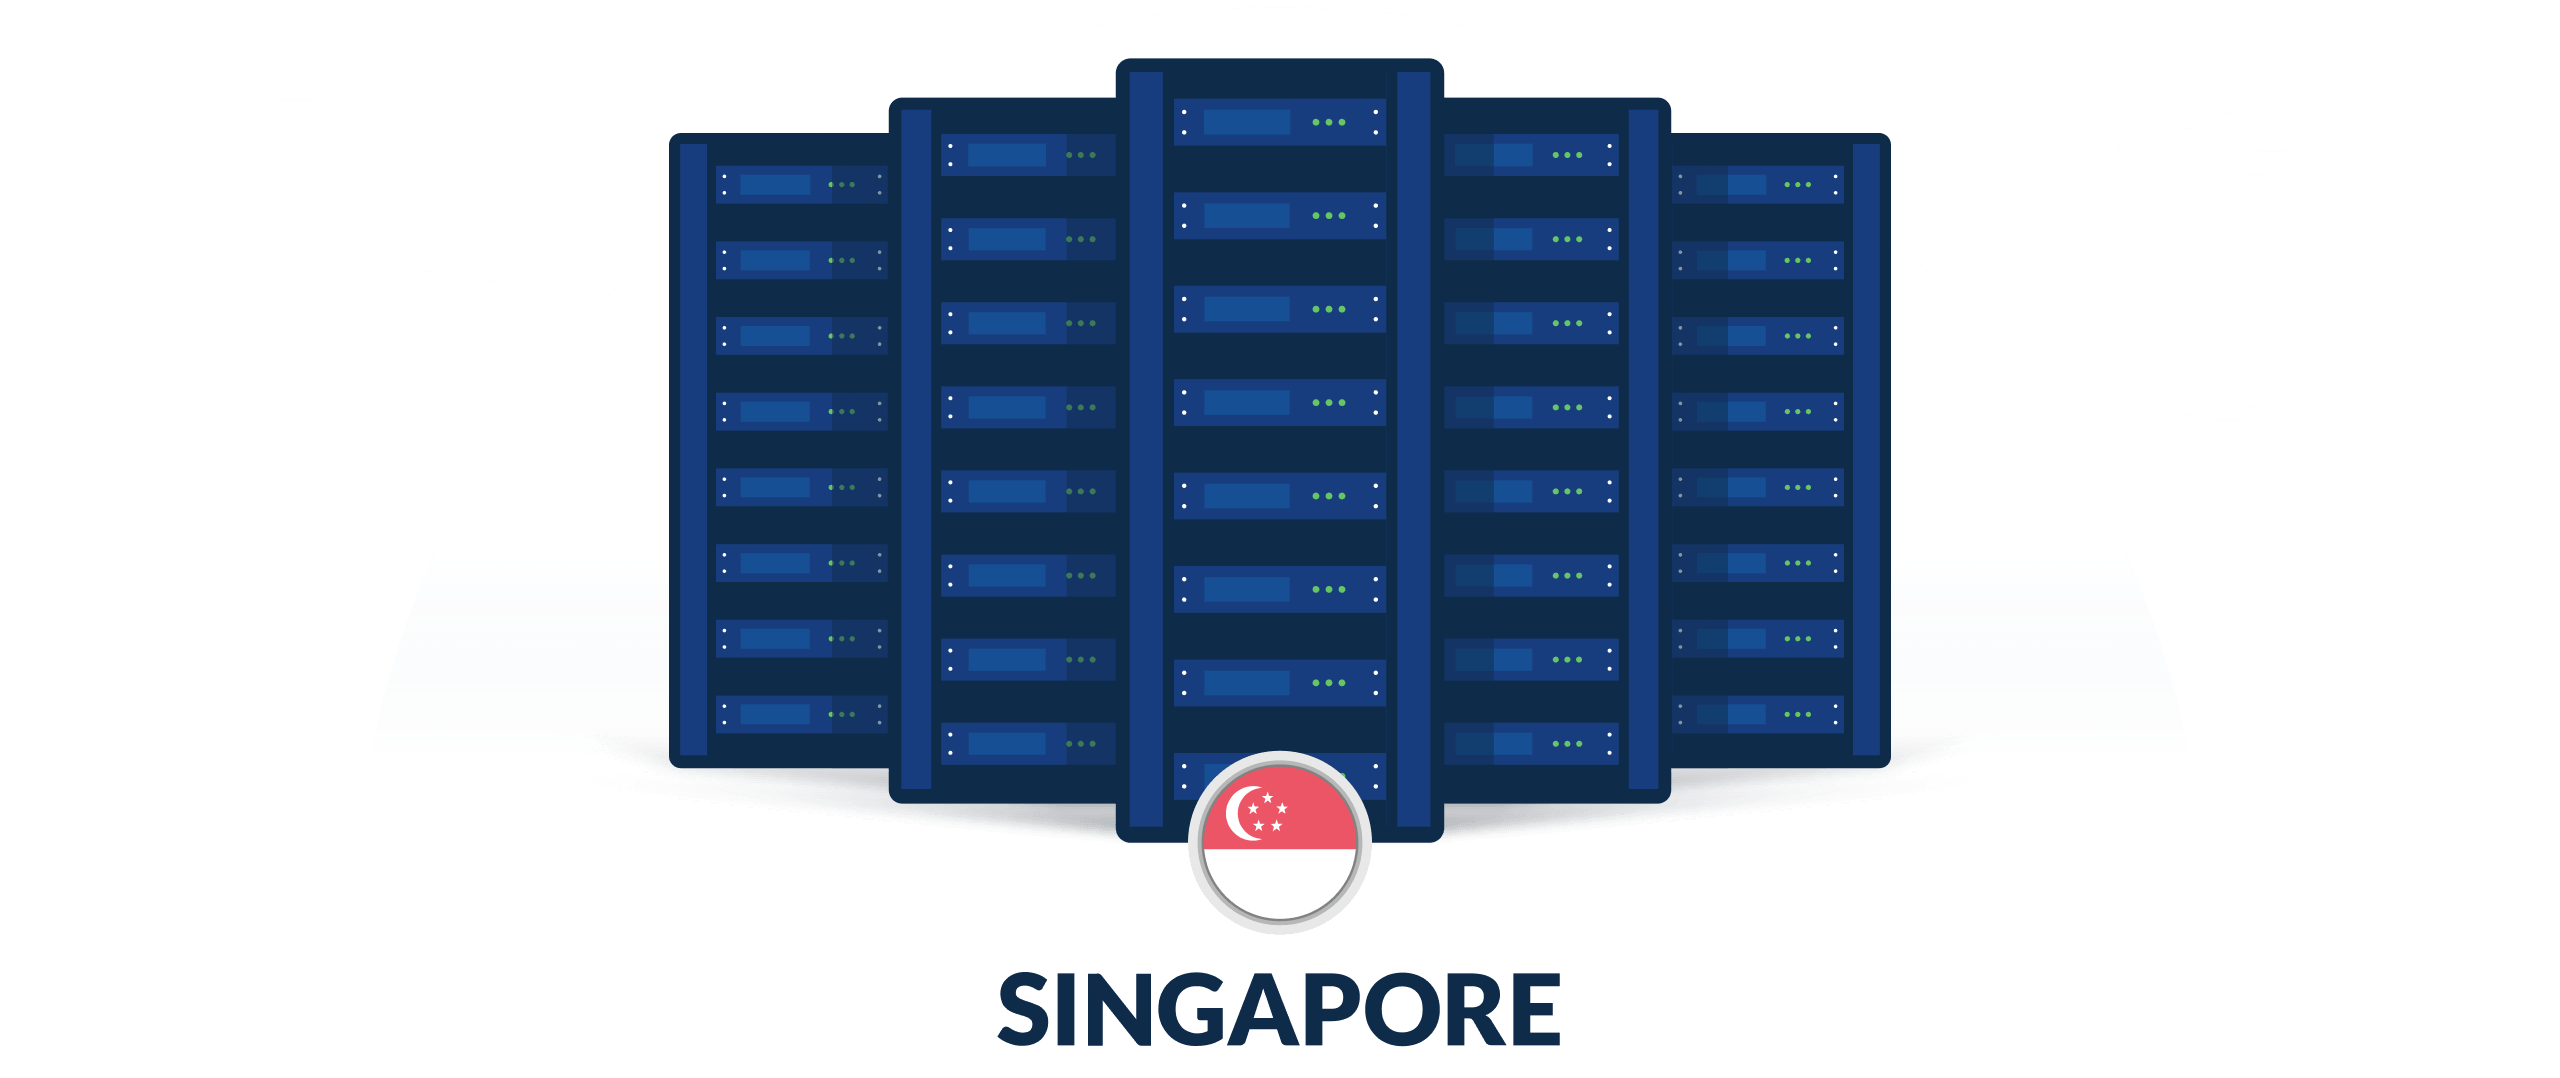 VPN servers in Singapore, Singapore